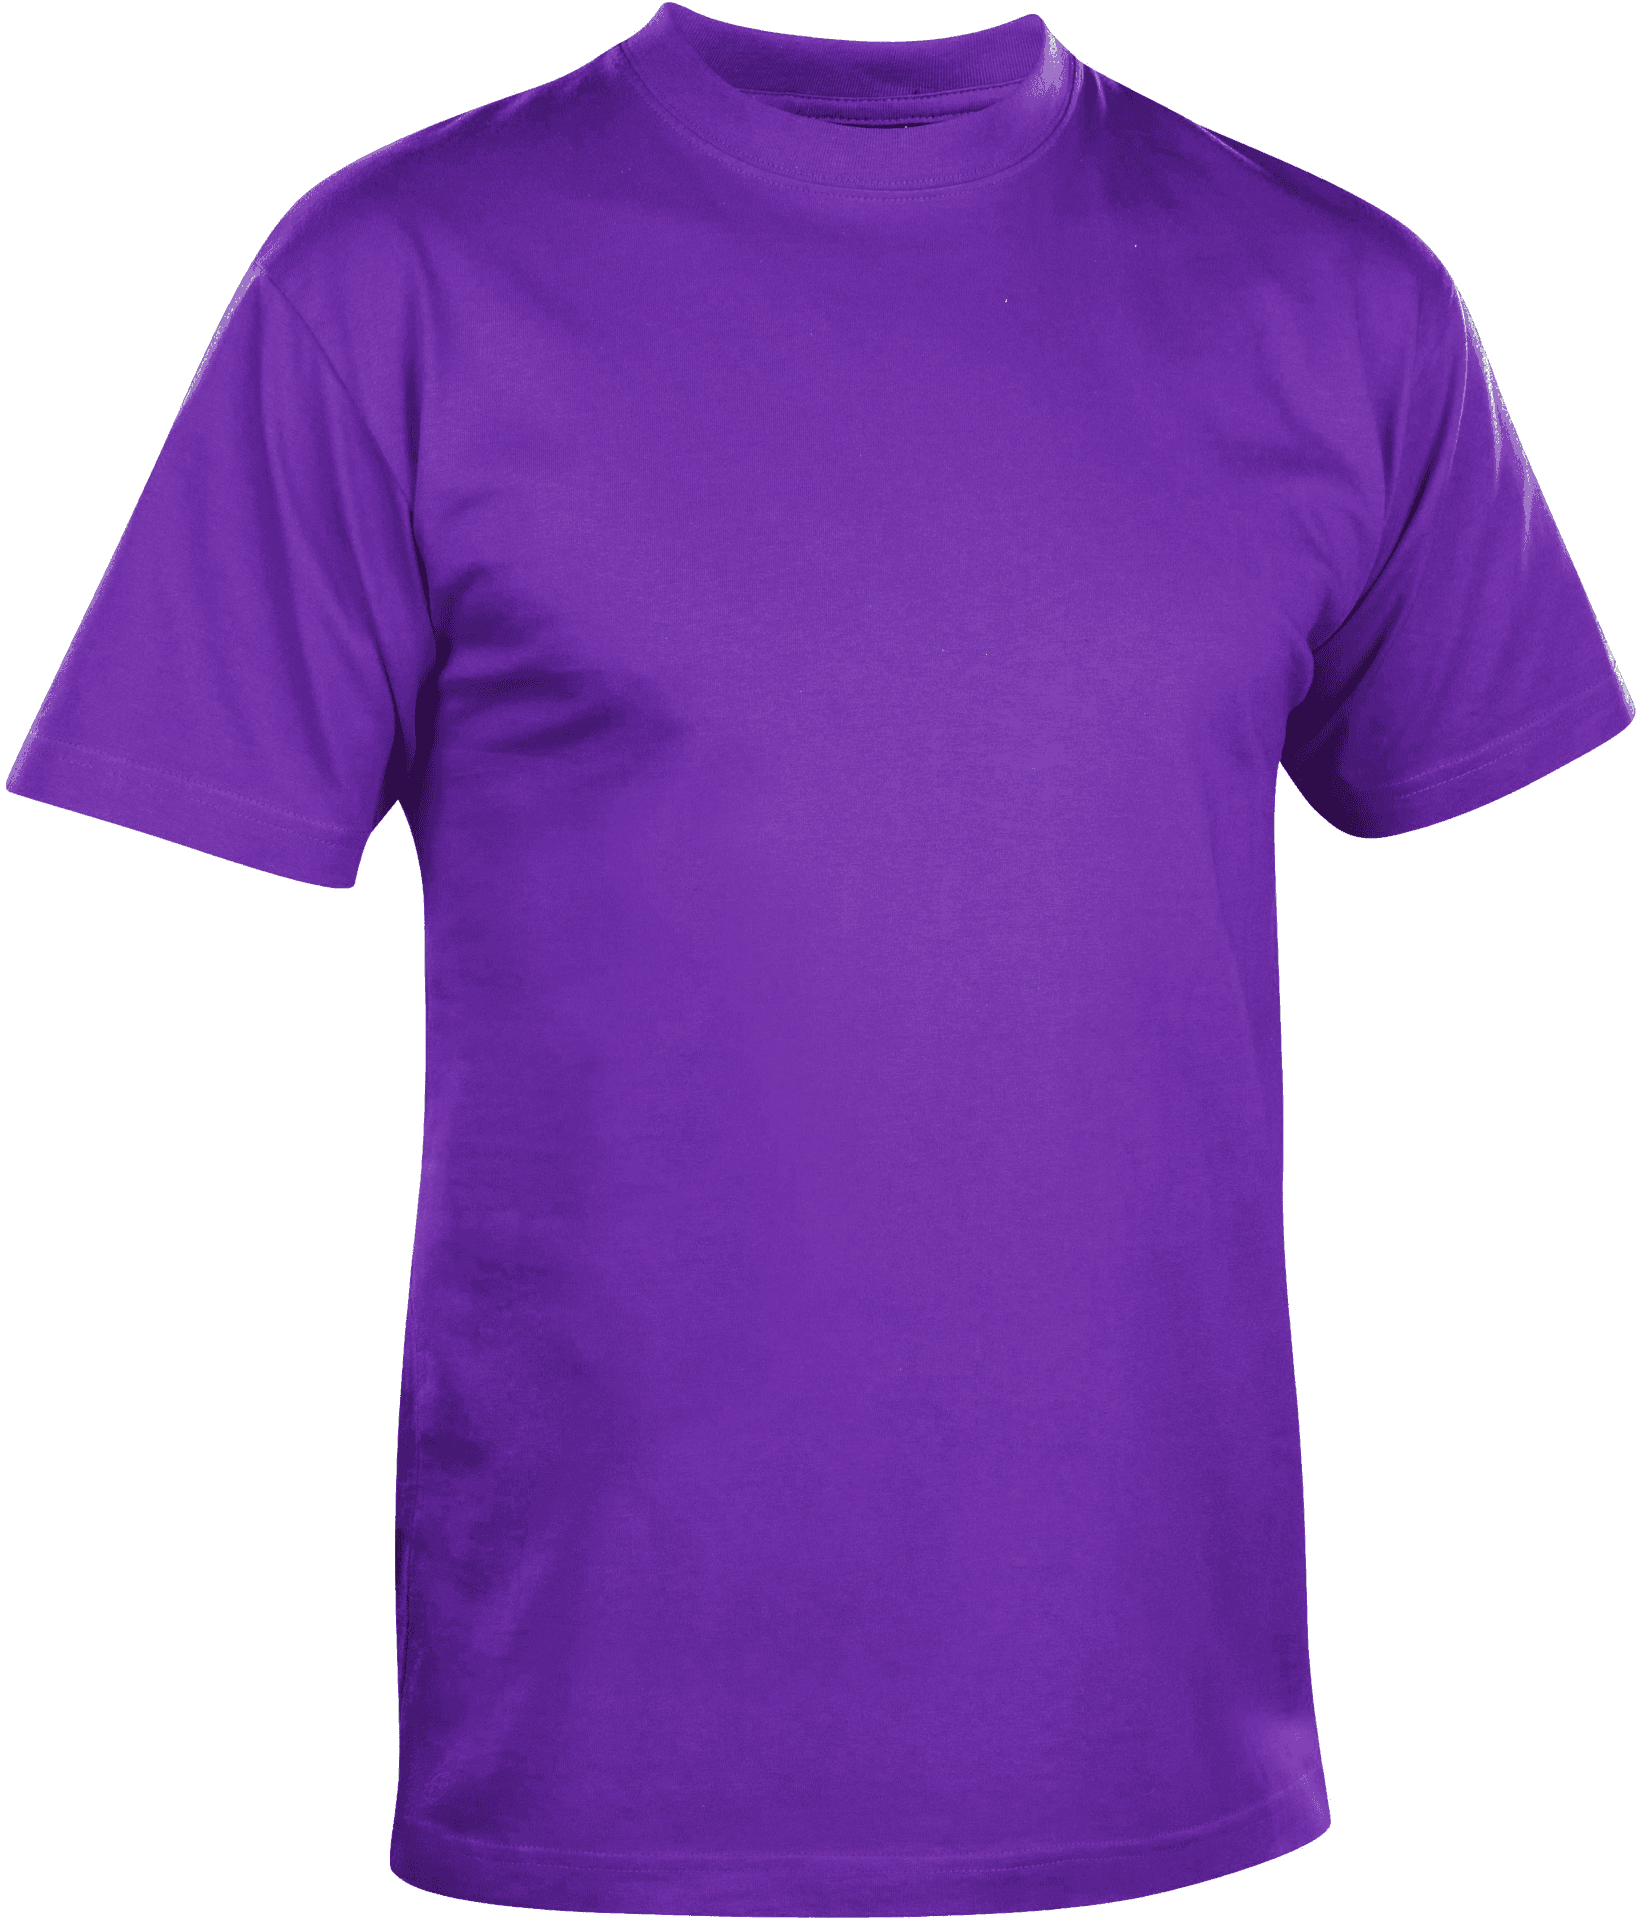 Purple Crew Neck T Shirt Mockup PNG image